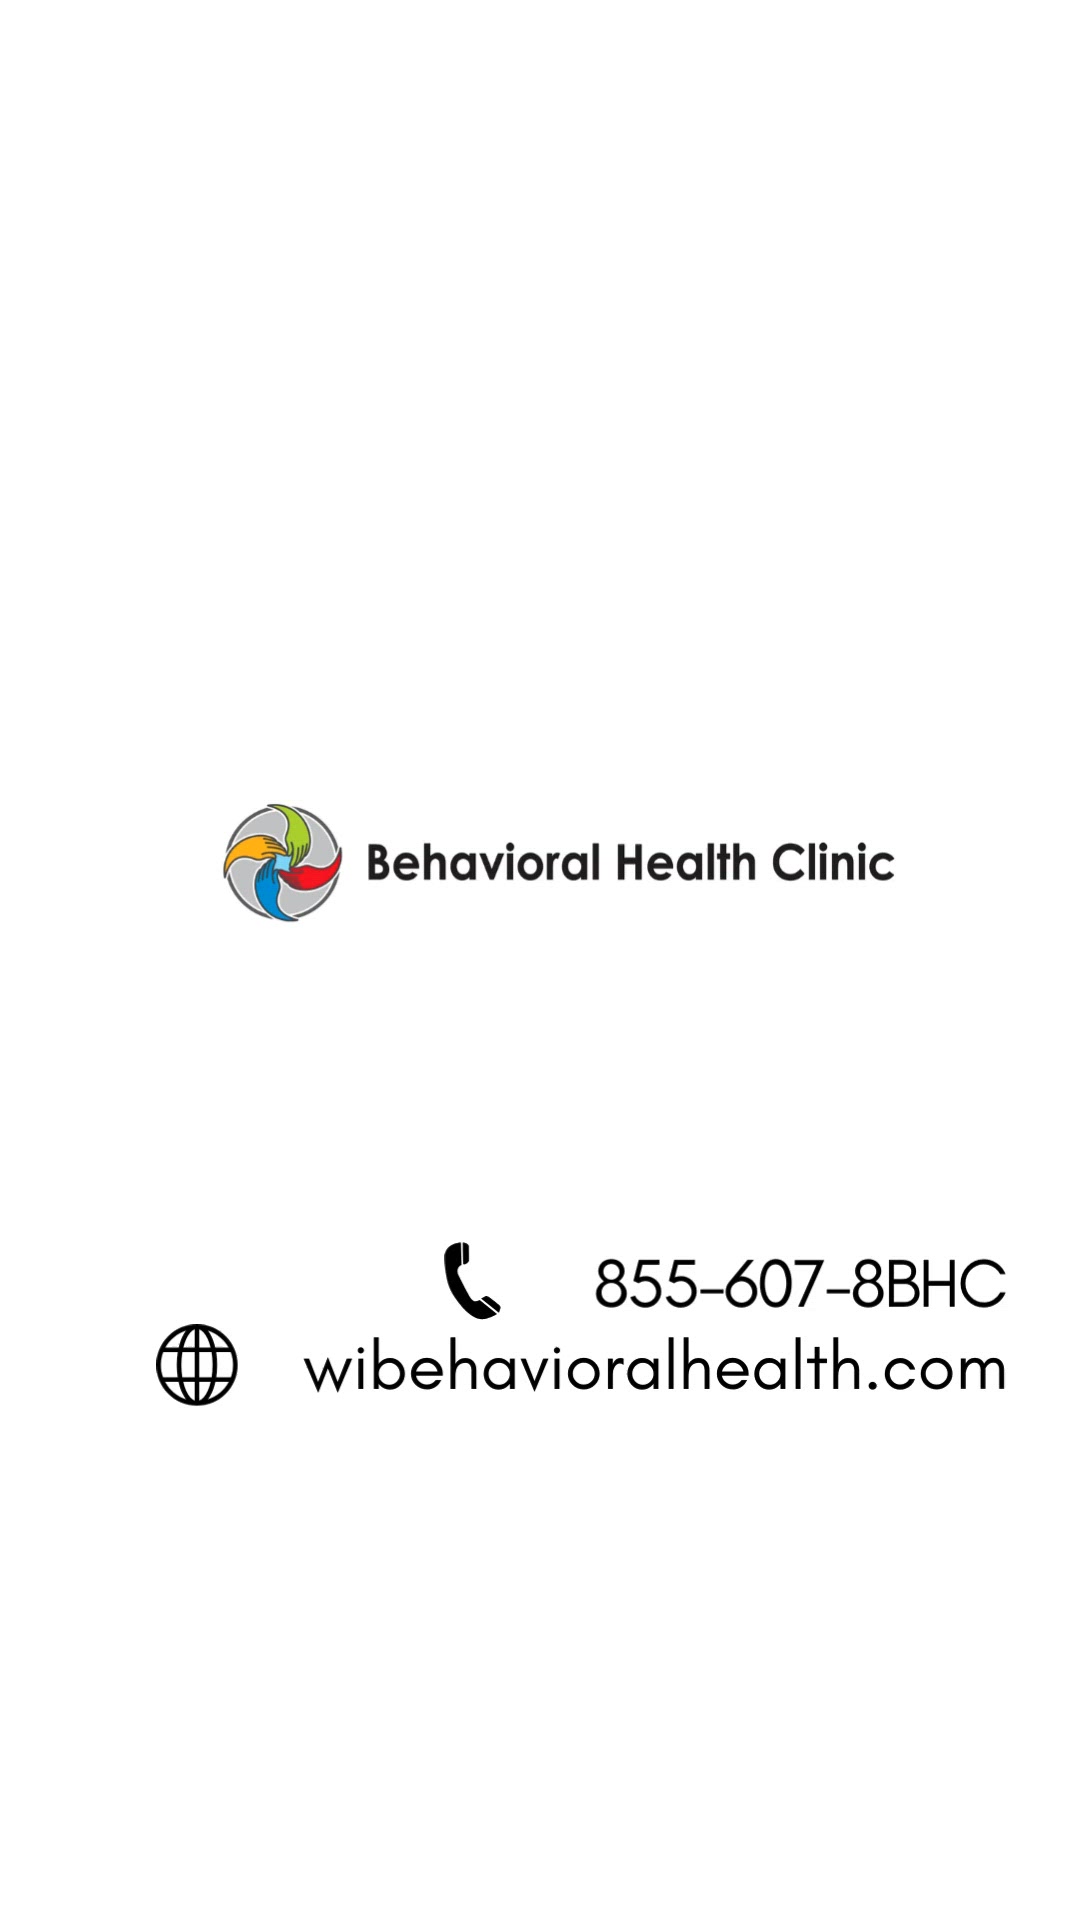 Behavioral Health Clinic (BHC)